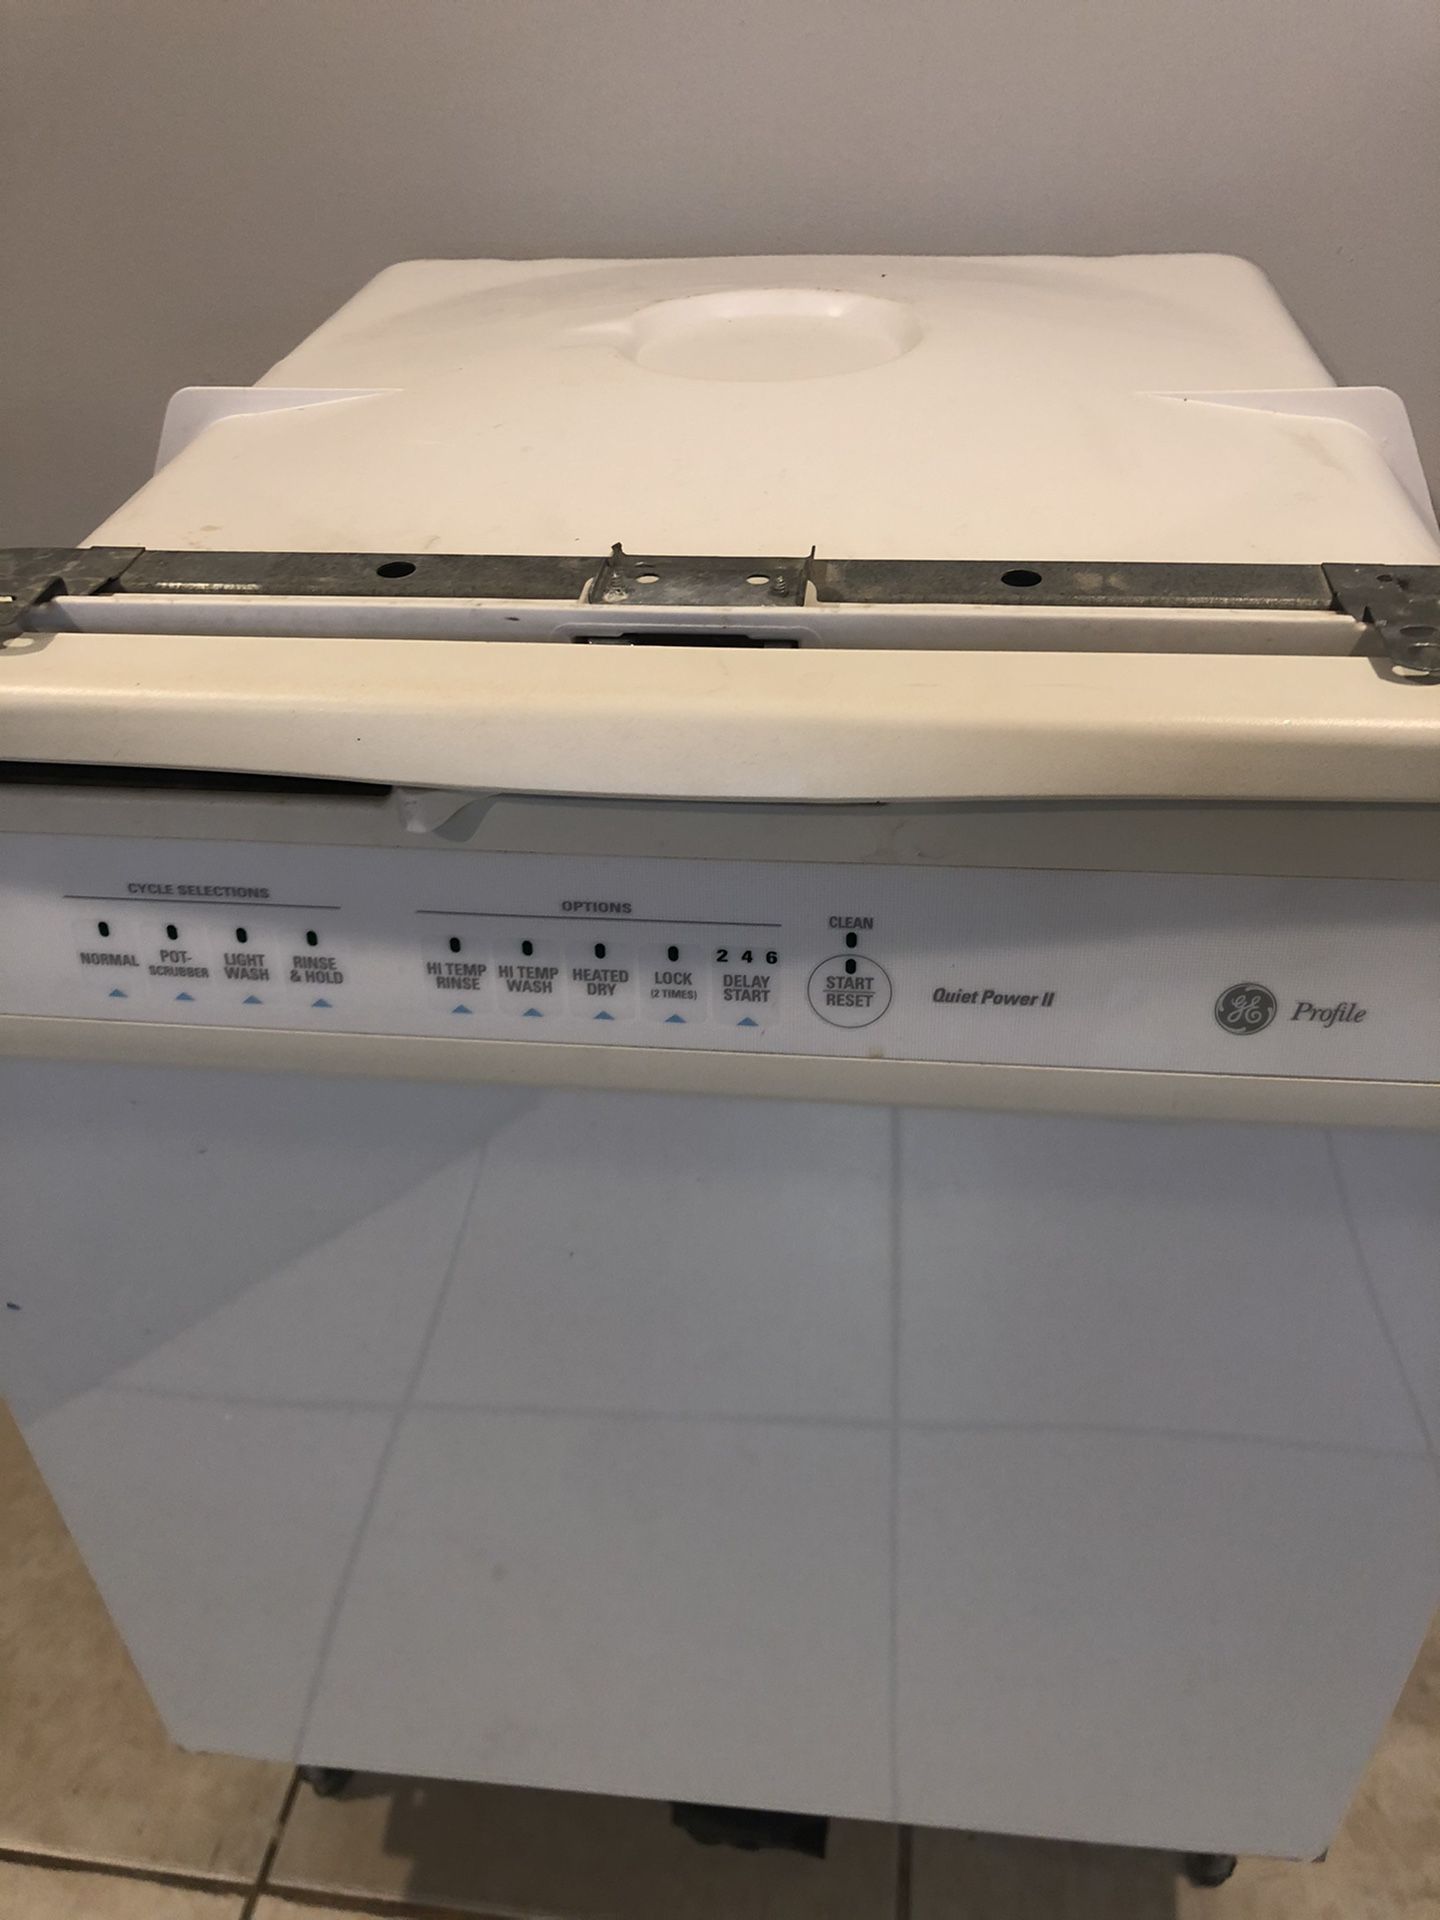 GE Profile Quiet Power 2 dishwasher (needs fixed)